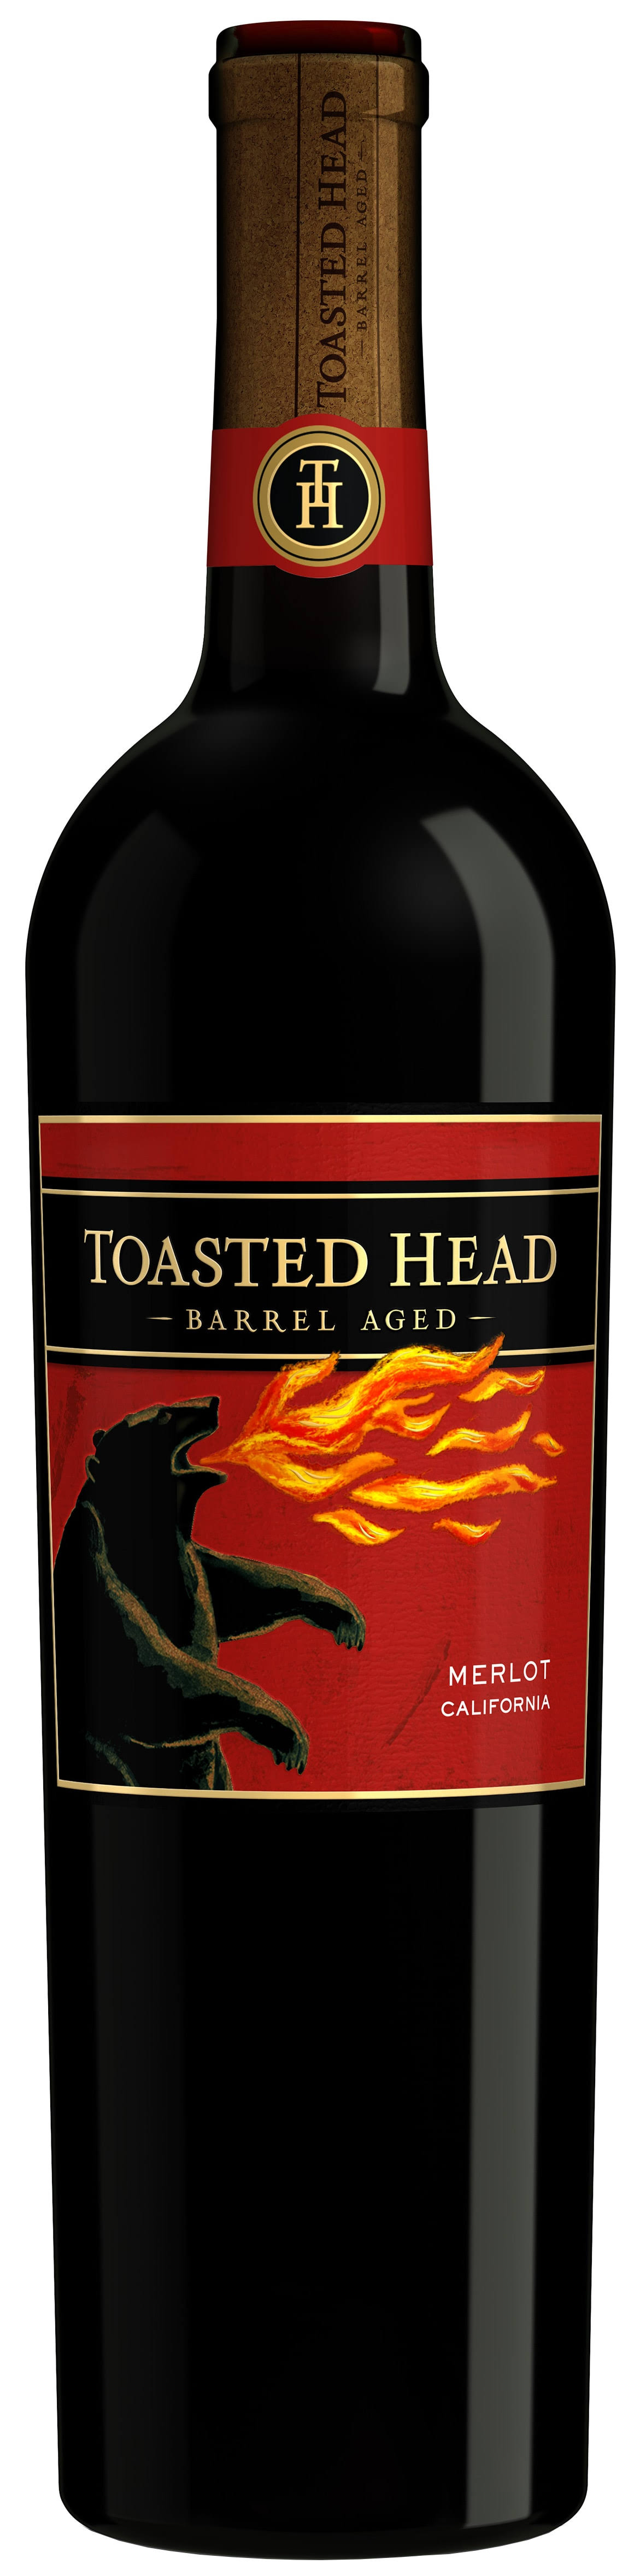 Toasted Head Merlot - California, United States